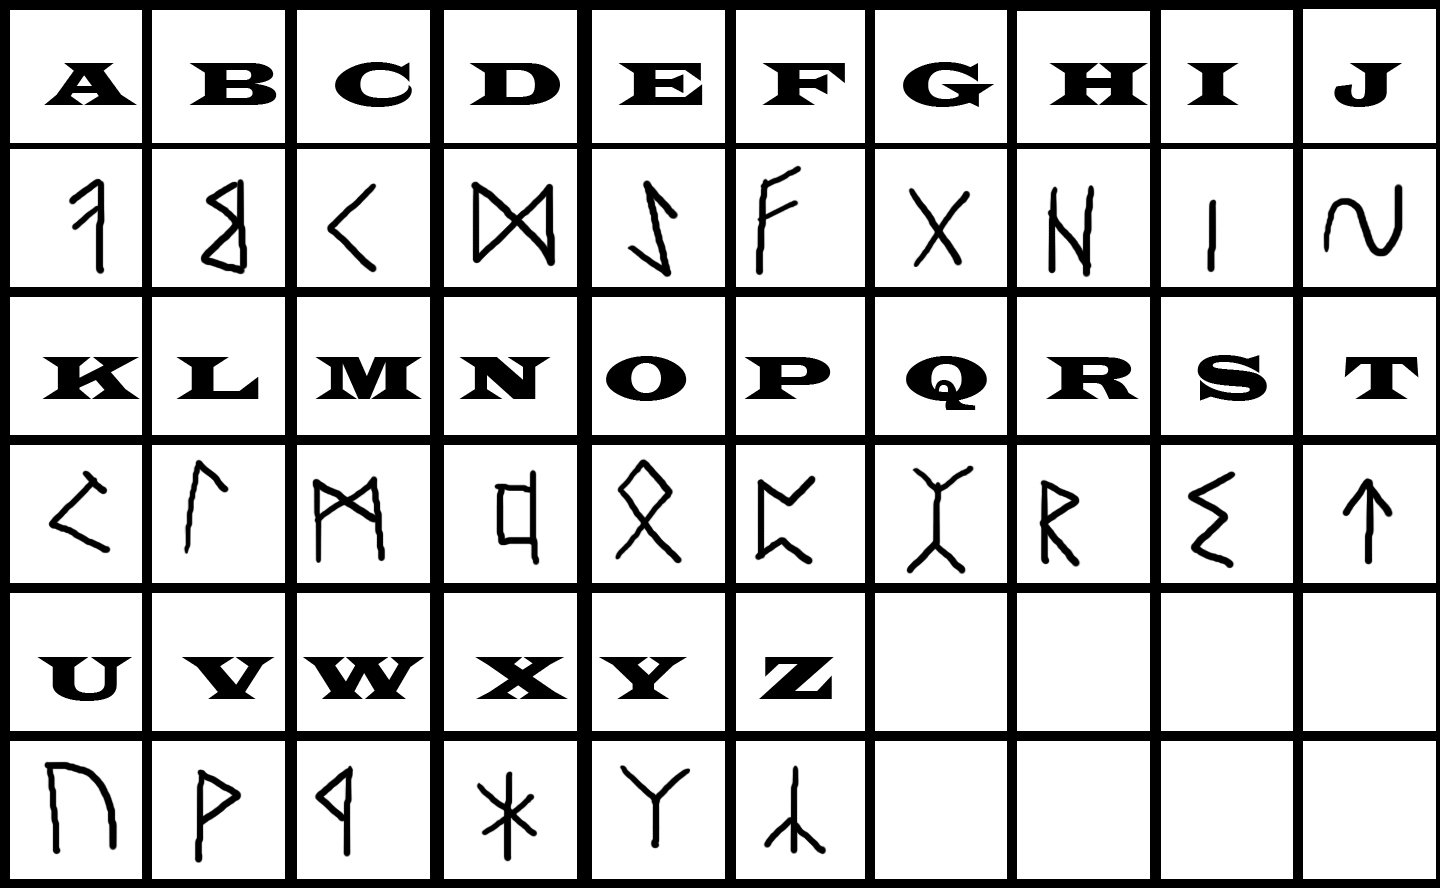 Codex rune. Символы шифрования. Знаки для шифровки. Зашифрованные символы. Шифр алфавит.